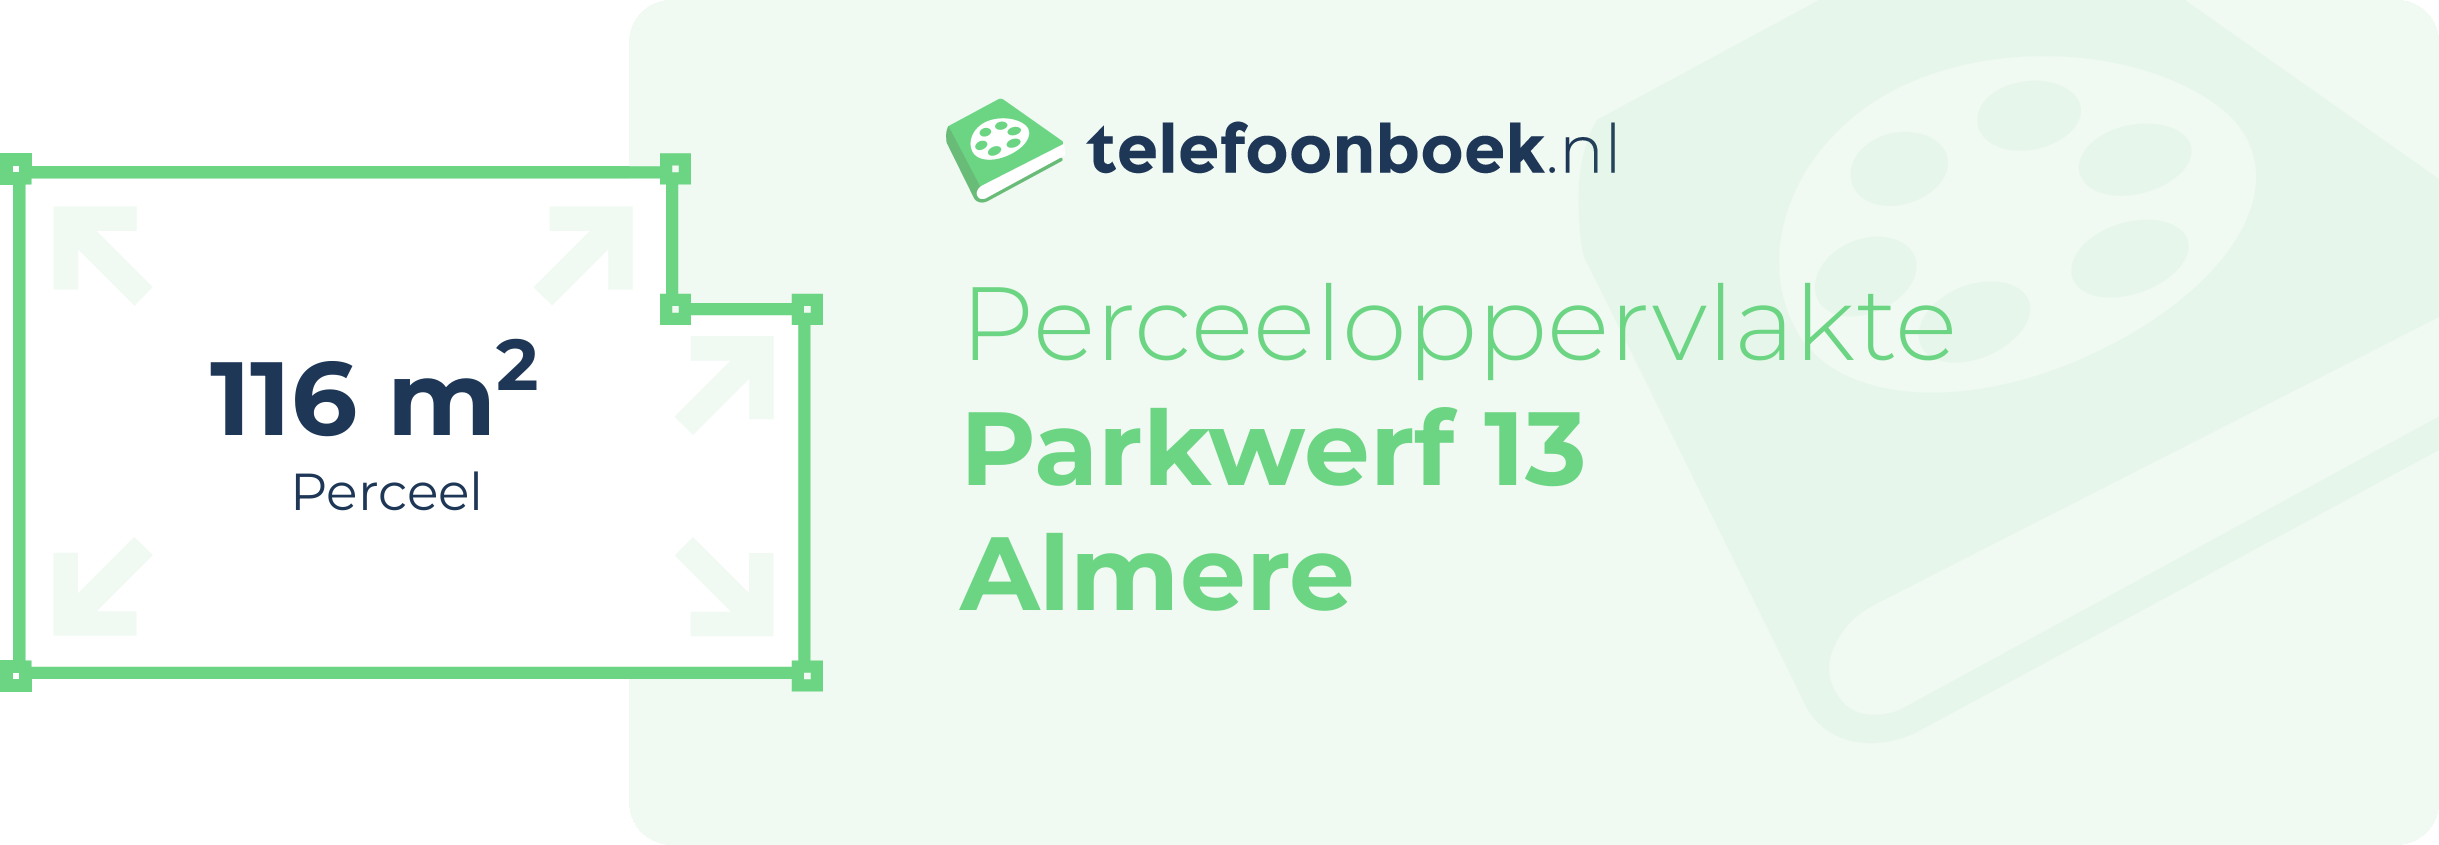 Perceeloppervlakte Parkwerf 13 Almere